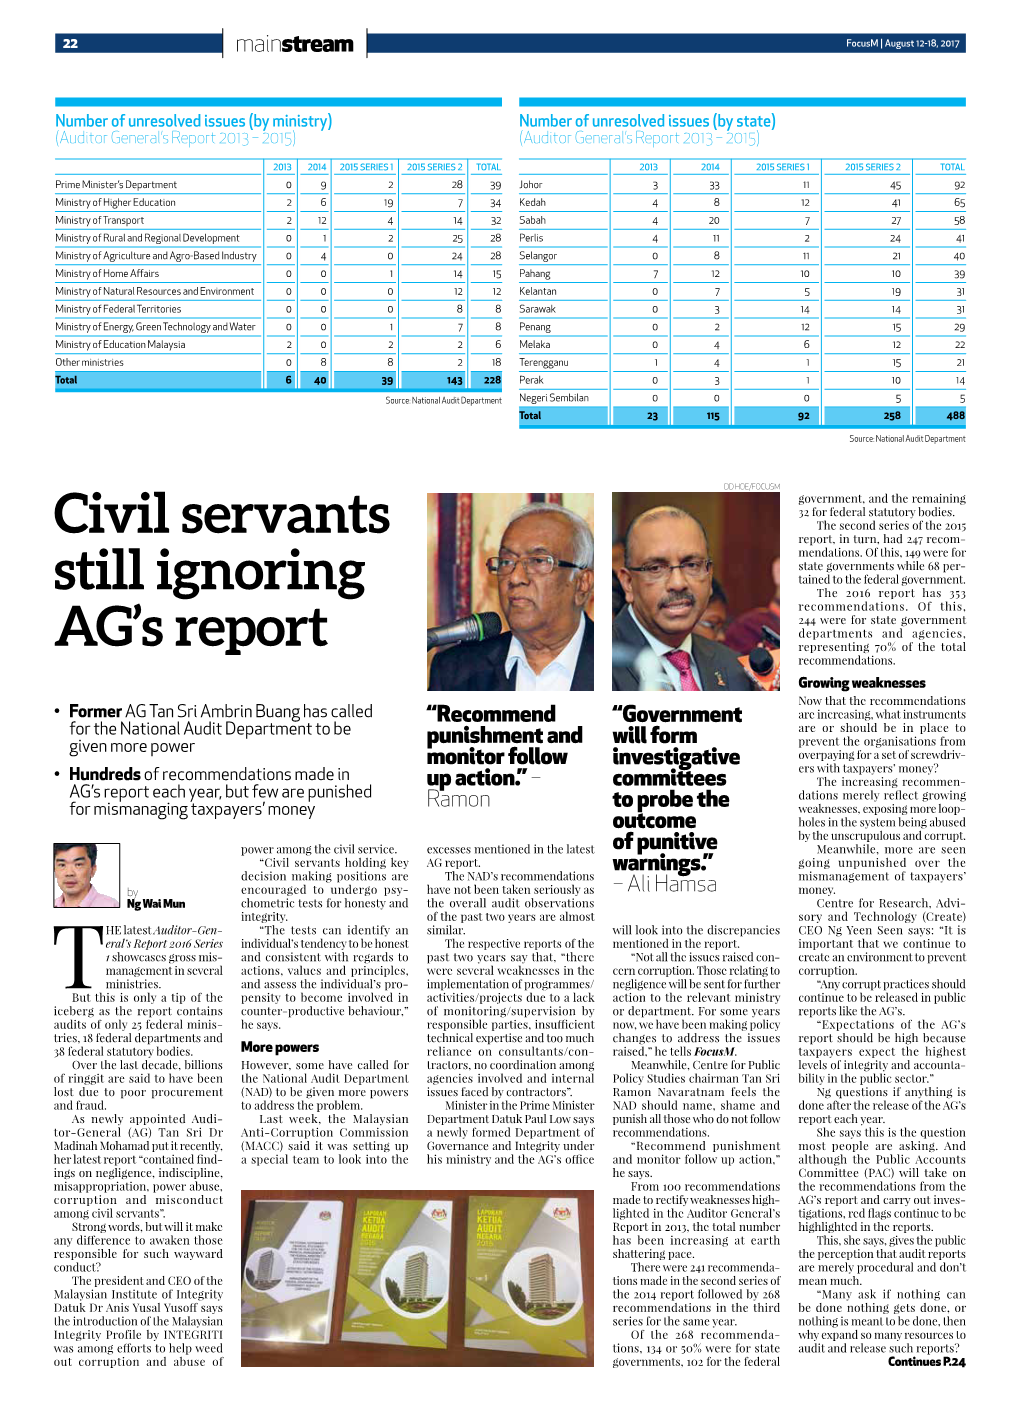 Civil Servants Still Ignoring AG's Report